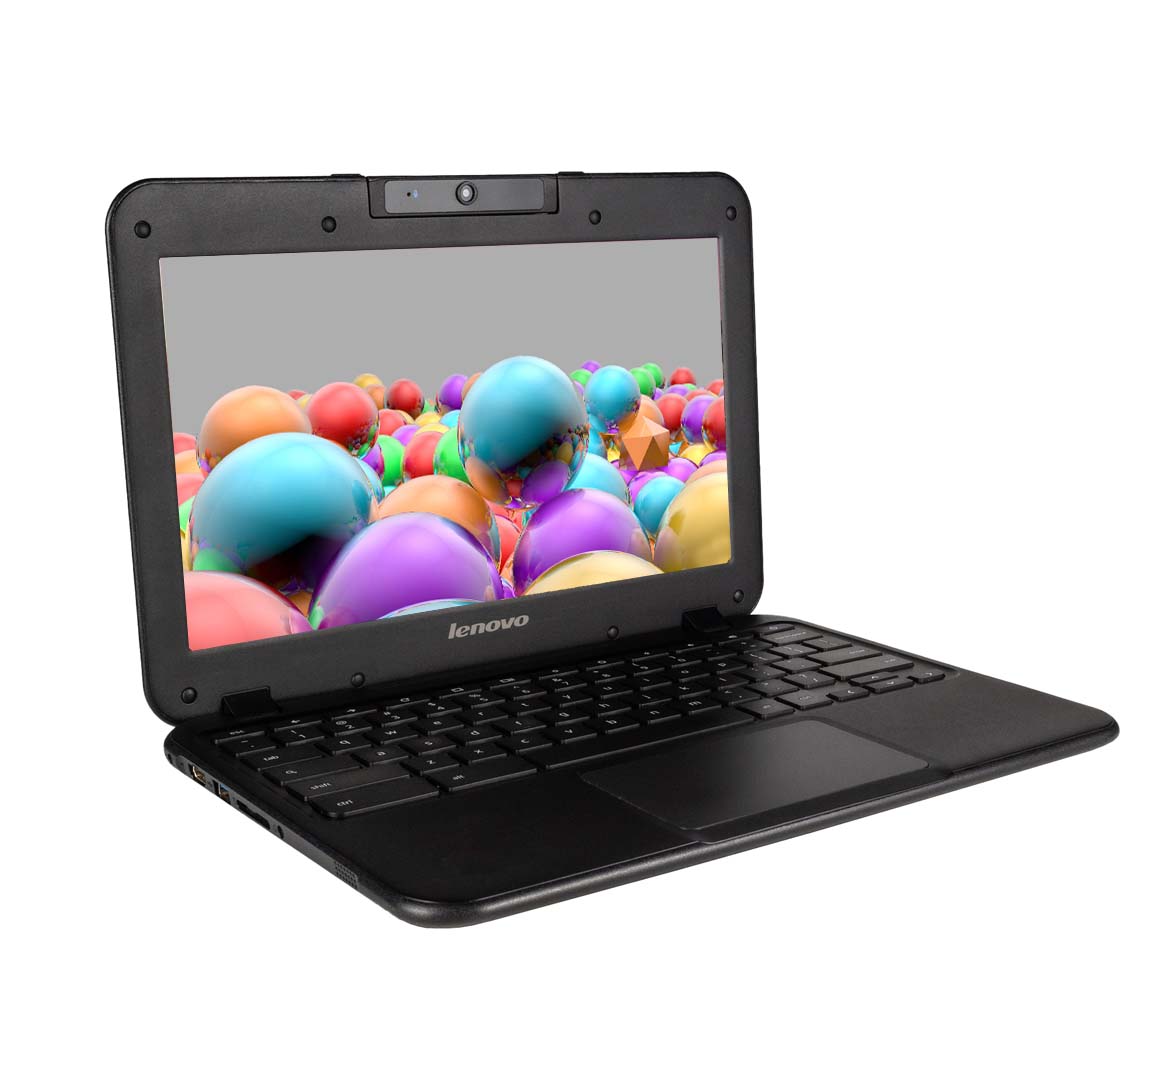 Lenovo Chromebook N21 Notebook Laptop, Intel Celeron N Series CPU, 4GB RAM, 256GB SSD, 11.6 inch Display, Chrome OS, Refurbished Laptop